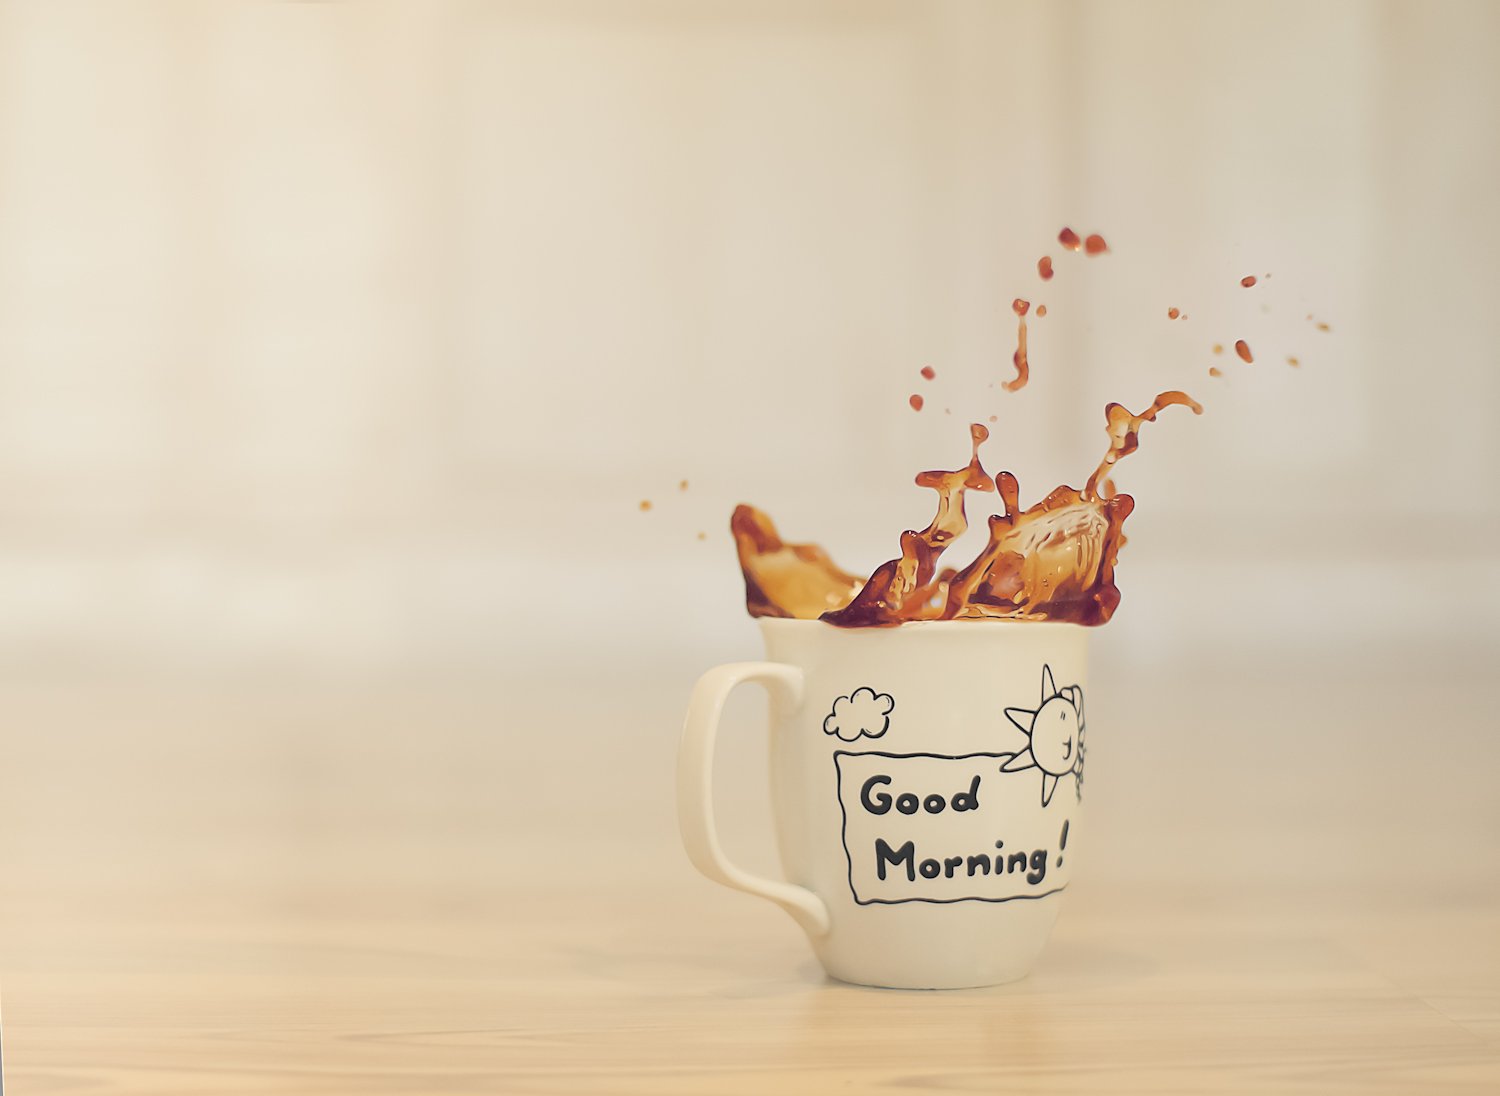 I have coffee in the morning. Доброе утро креативные. Необычное утро. Доброе утро креатив. Креативный кофе.